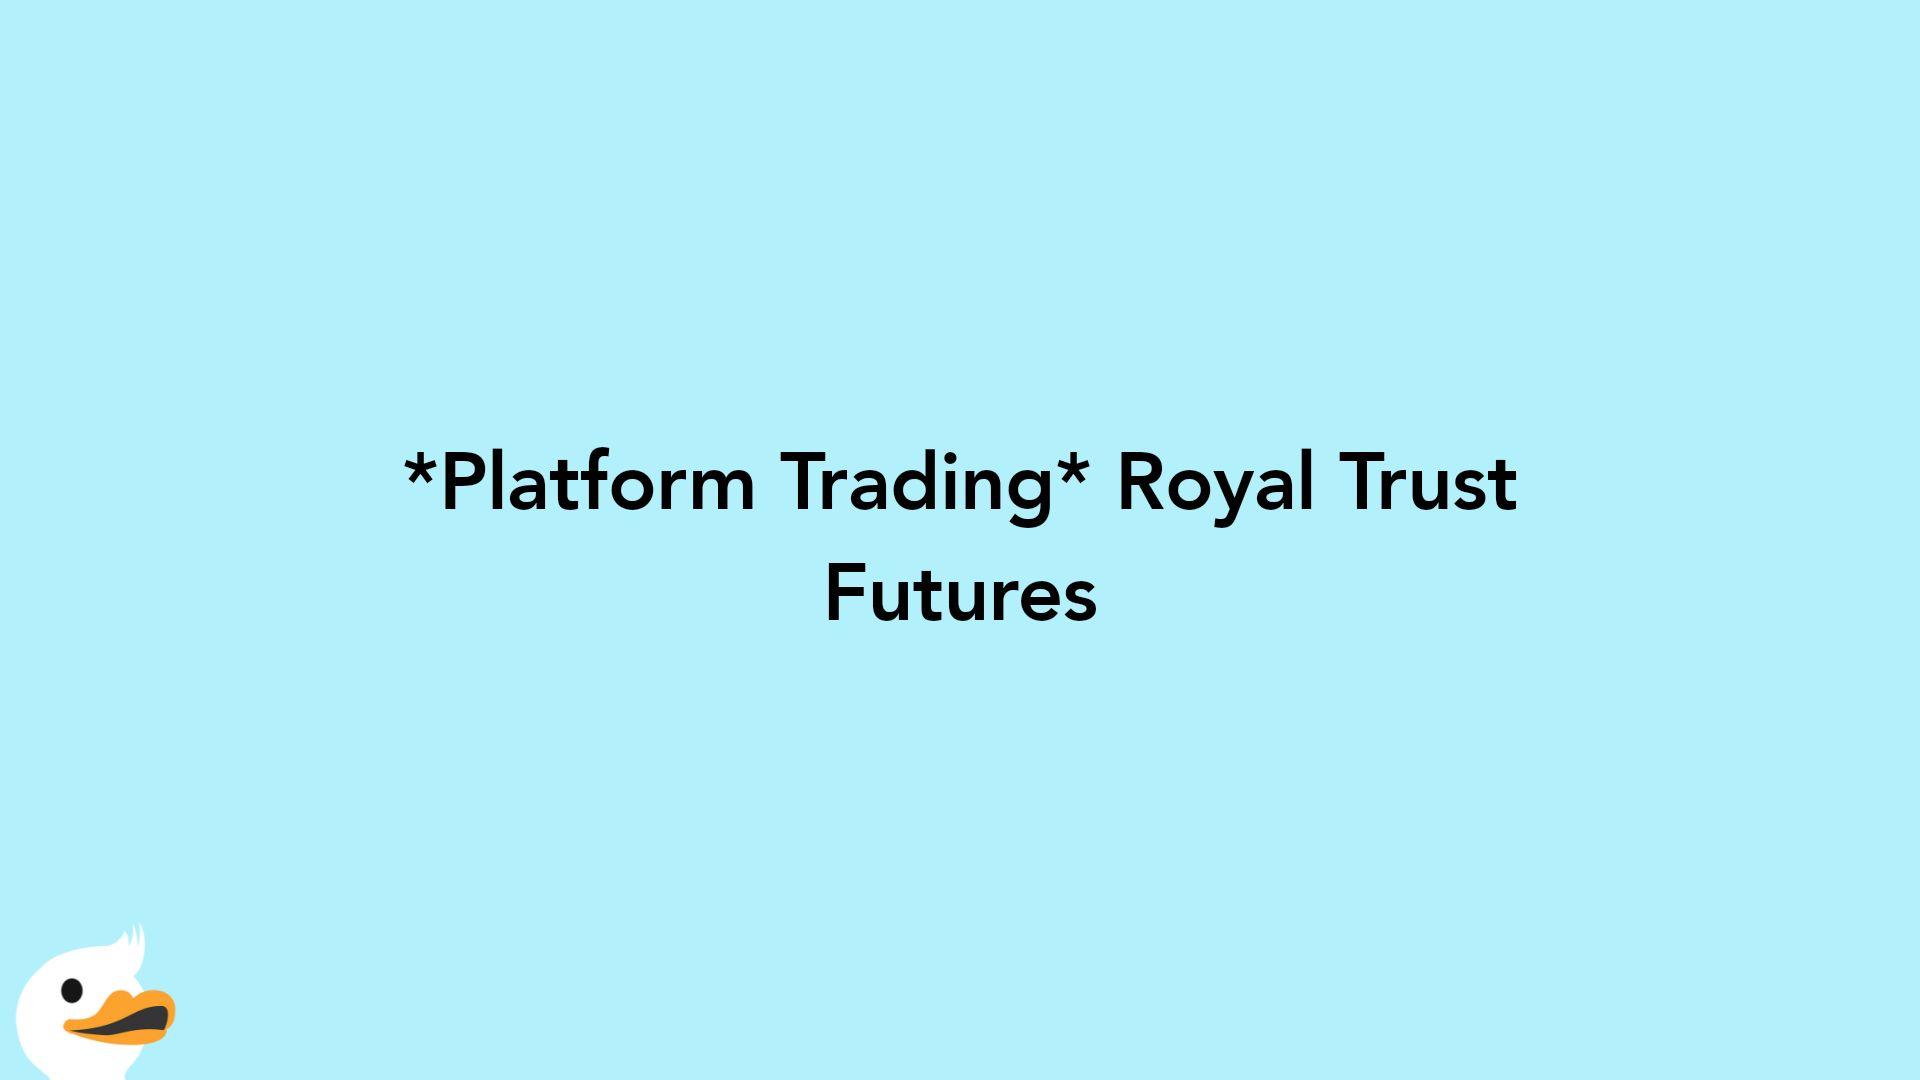 Platform Trading Royal Trust Futures